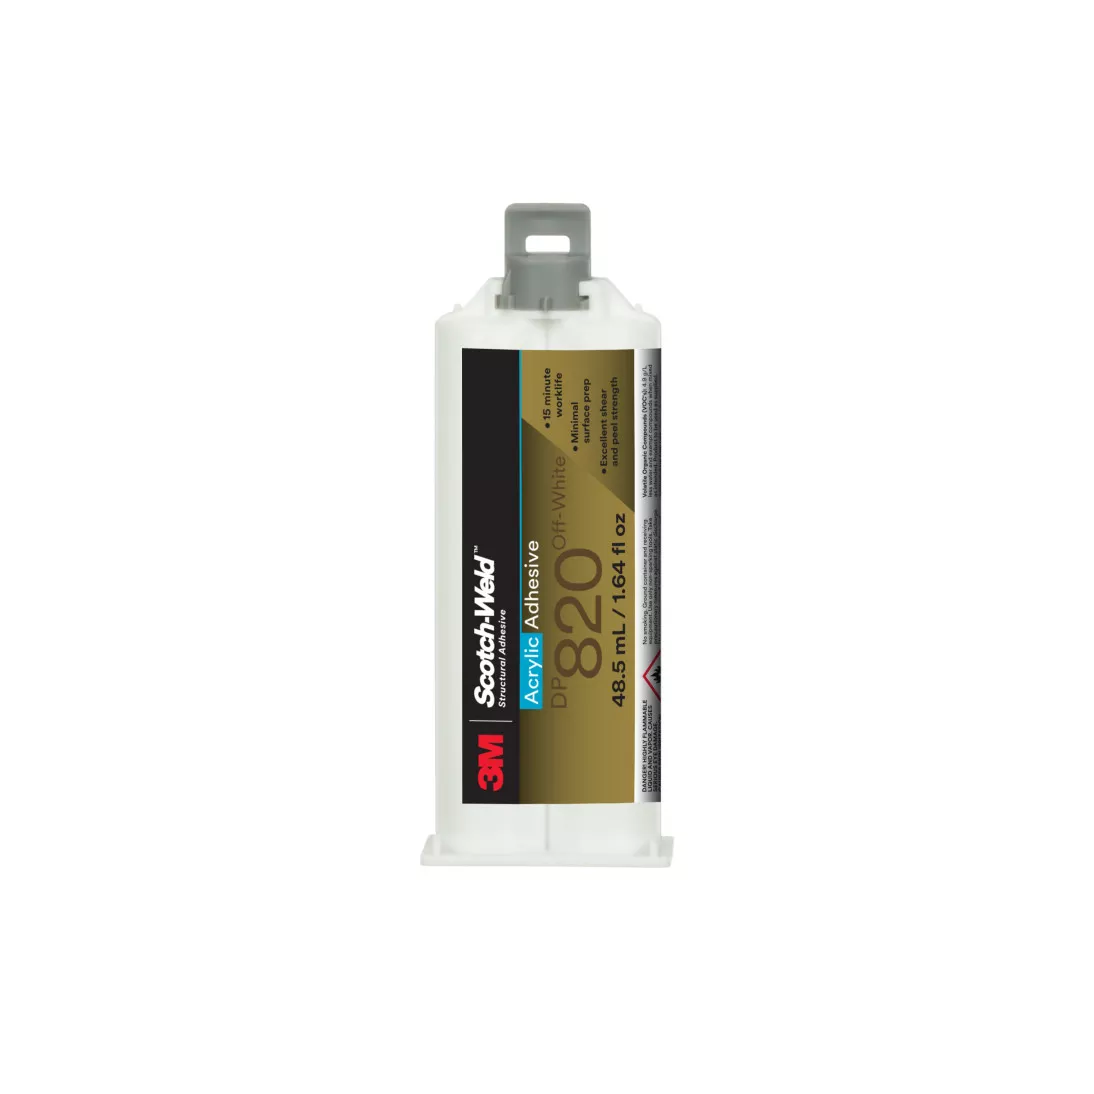 3M™ Scotch-Weld™ Acrylic Adhesive DP820, Off-White, 48.5 mL Duo-Pak,
12/case